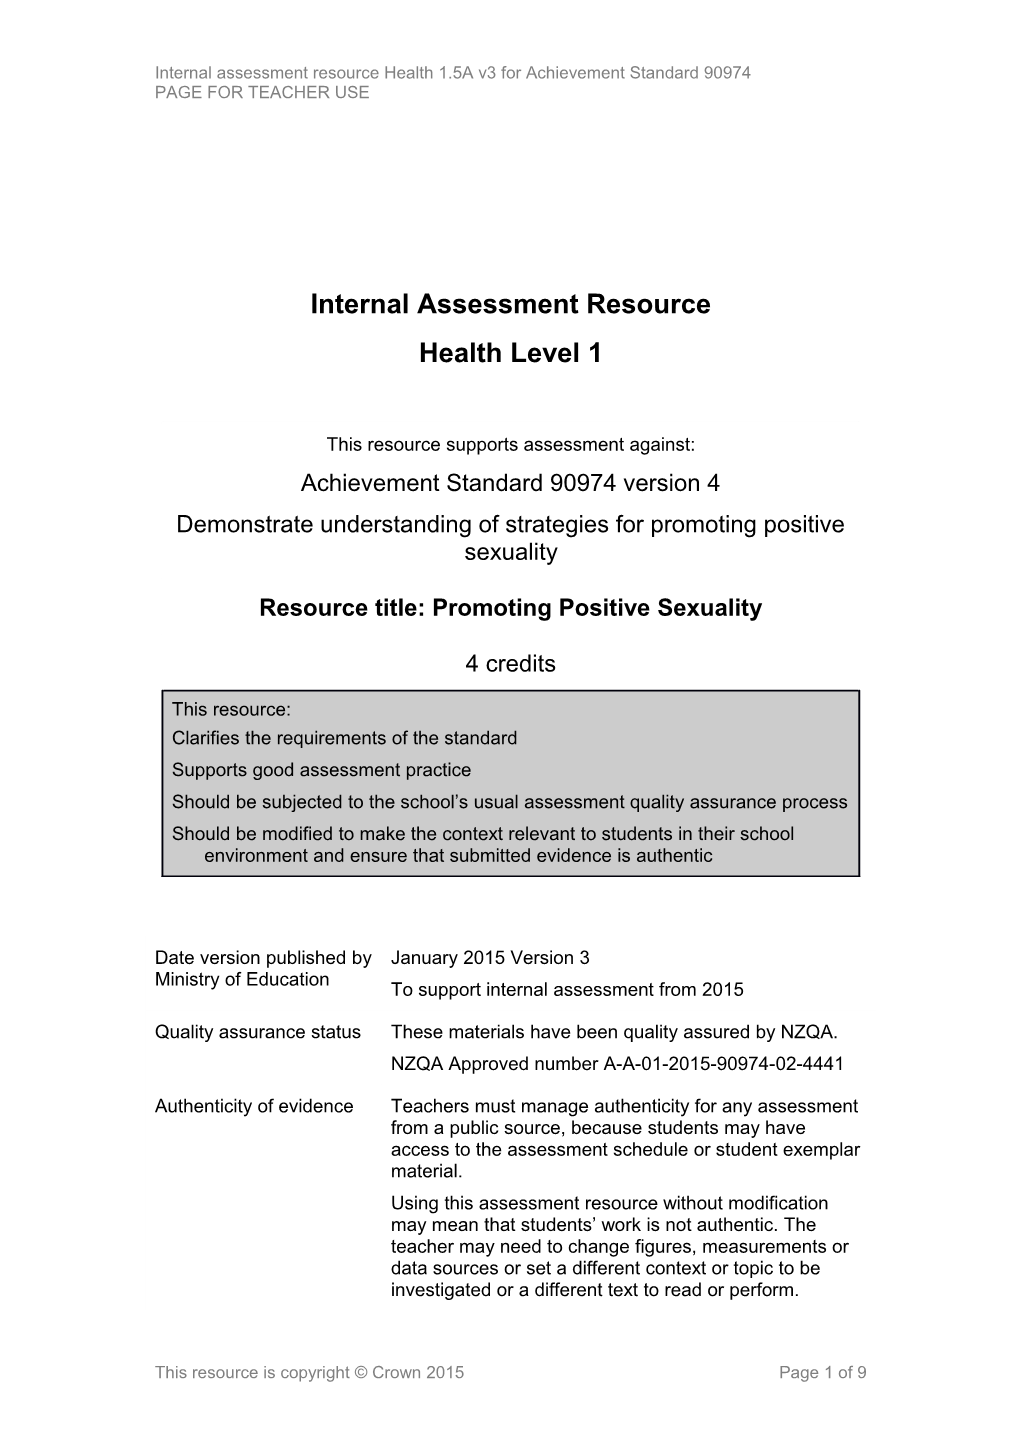 Level 1 Health Internal Assessment Resource